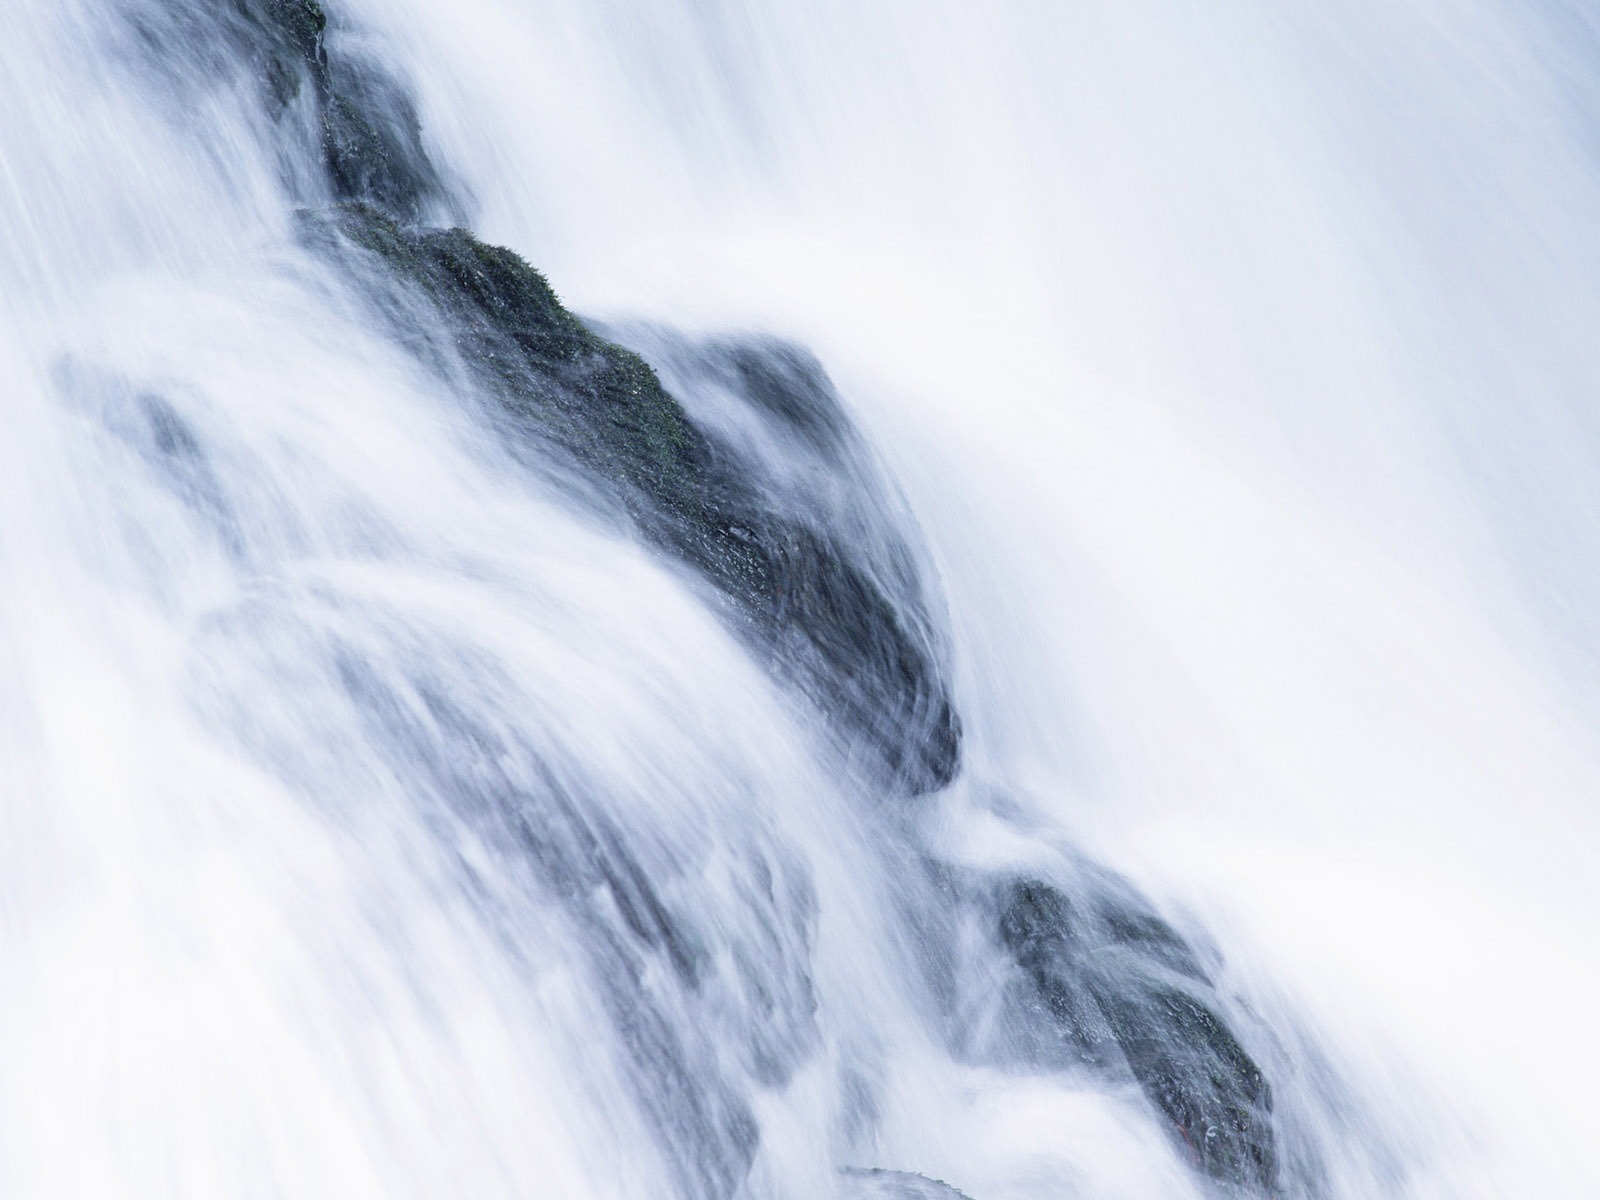 Waterfall-Streams HD Wallpapers #32 - 1600x1200